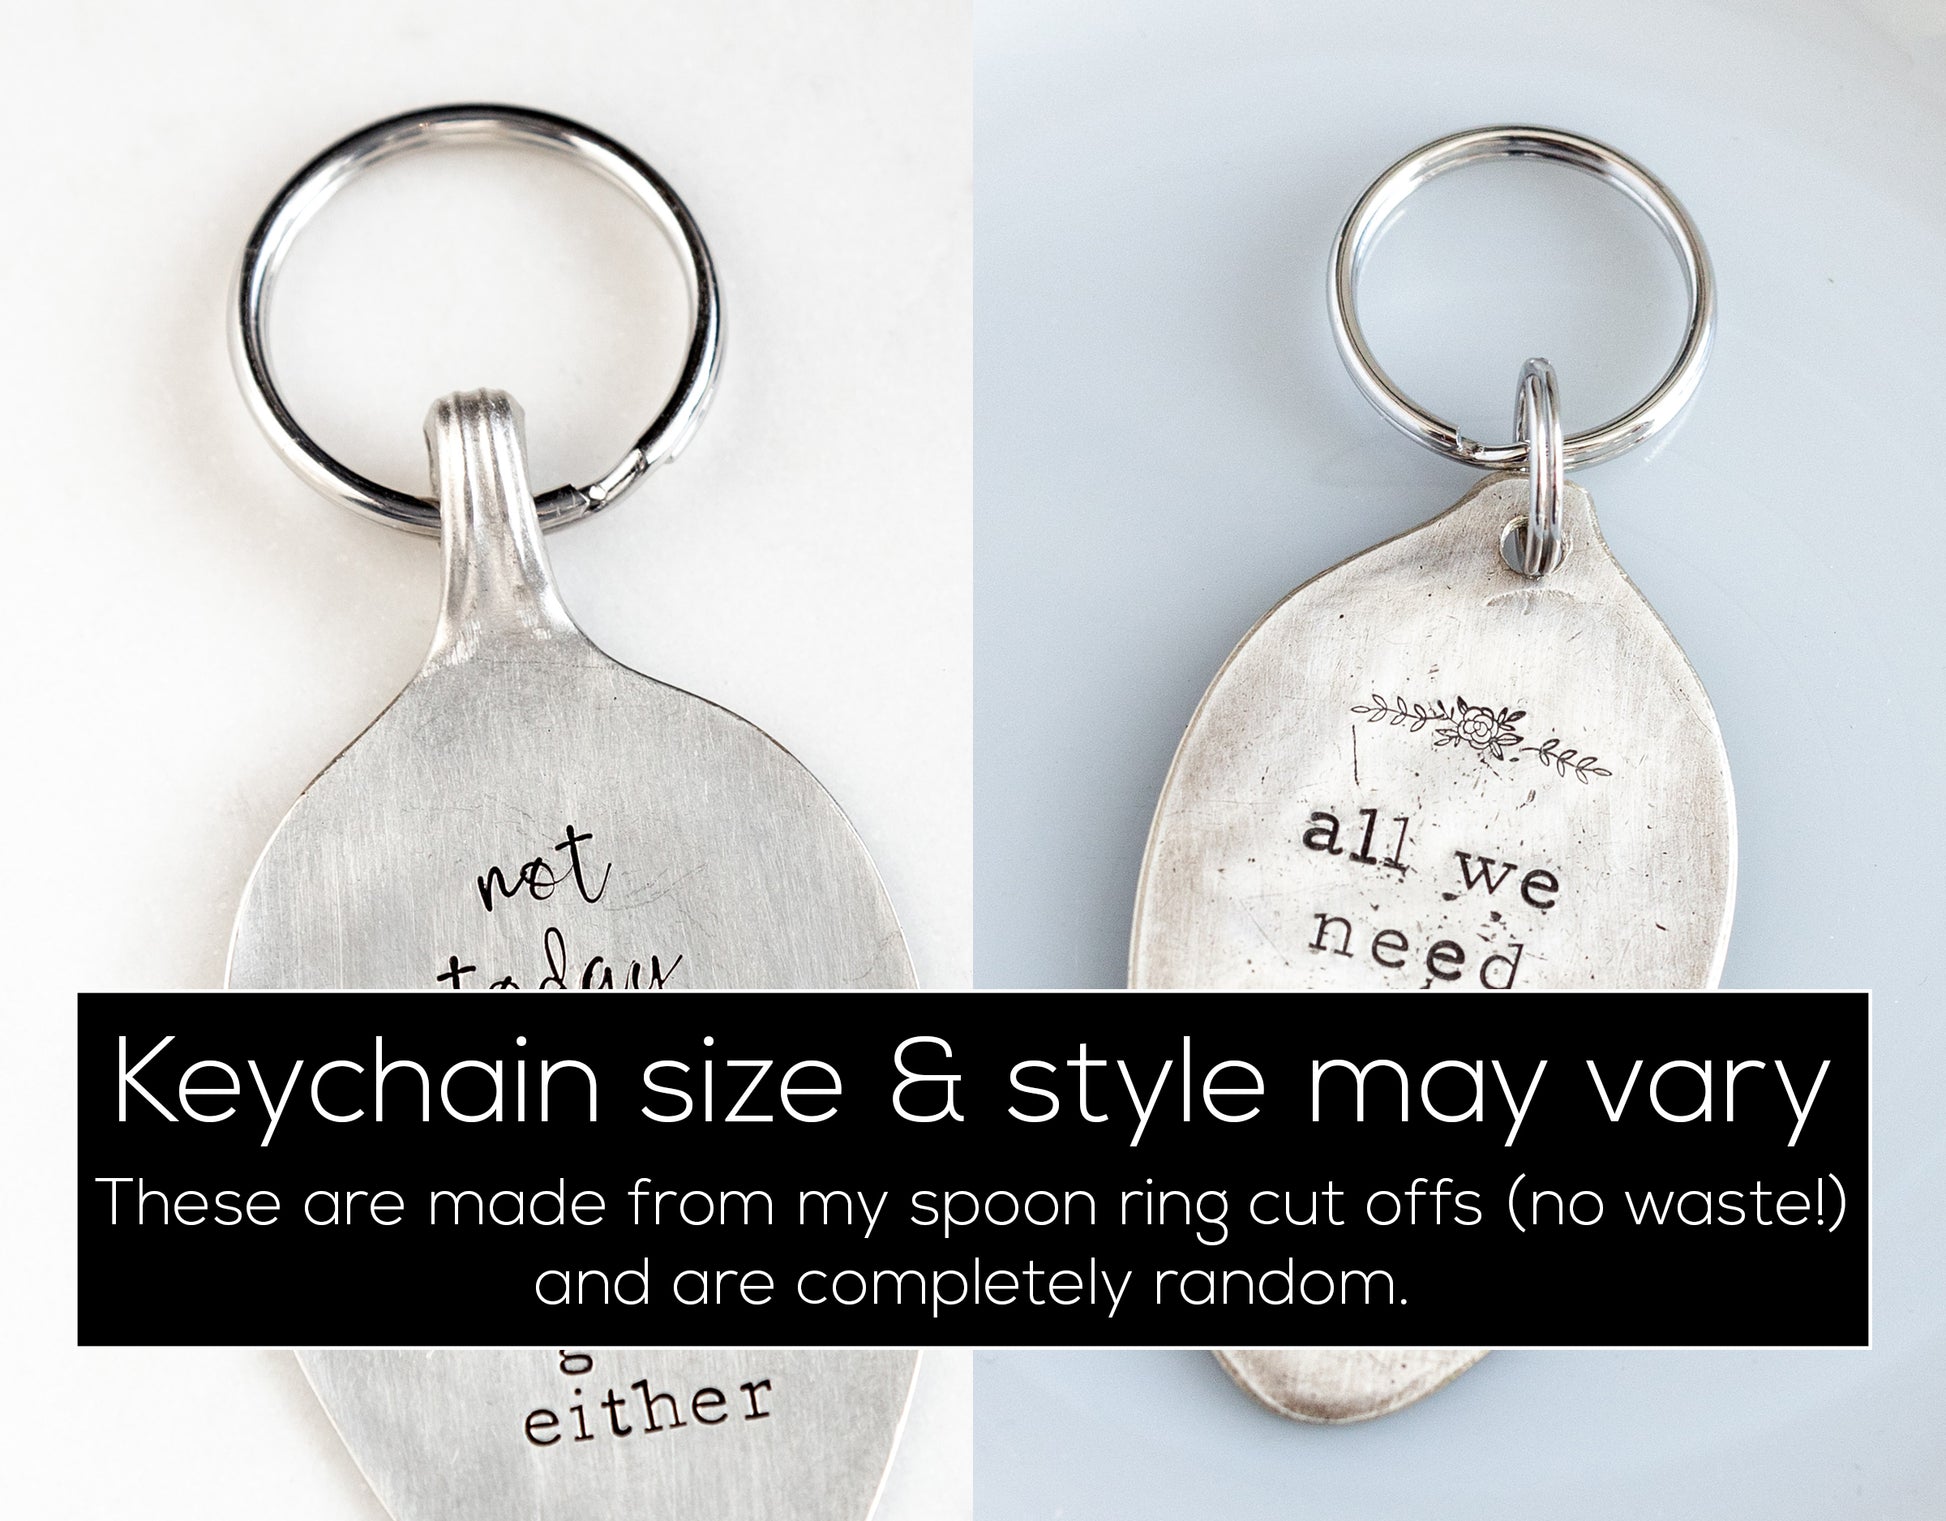 Good Moms Say Bad Words, Hand Stamped Vintage Spoon Keychain Keychains callistafaye   